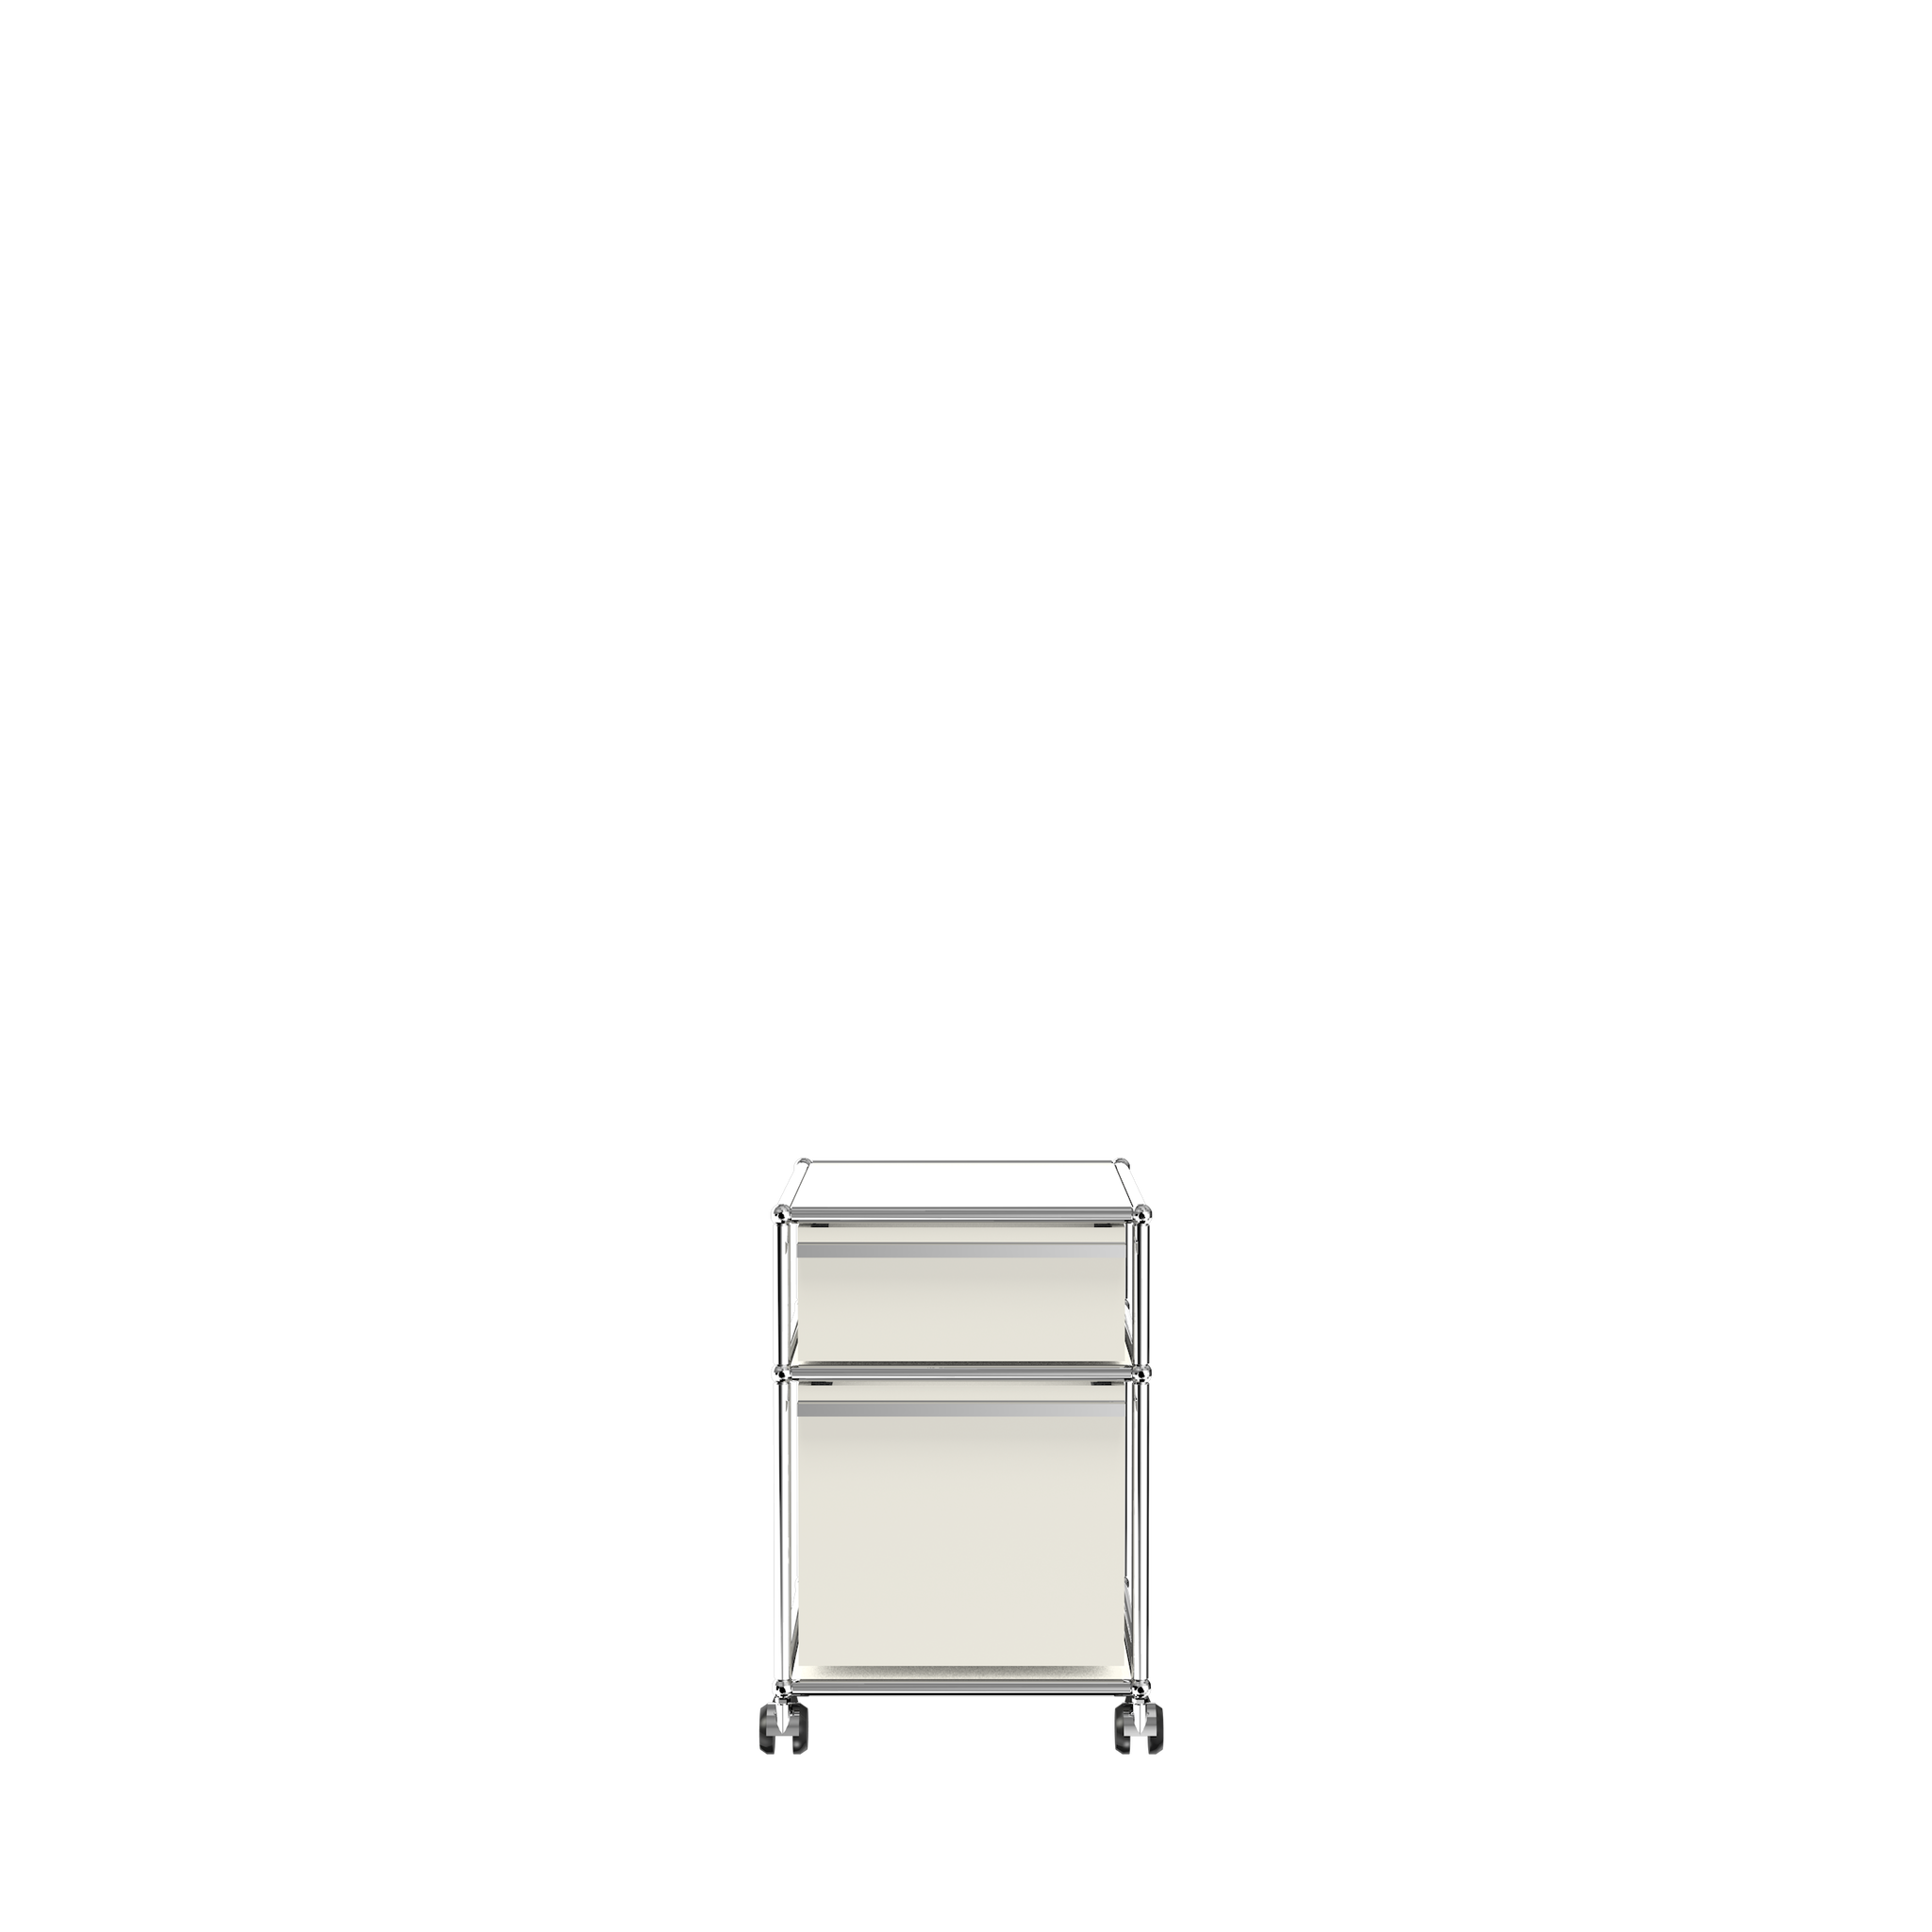 Modern 2 Drawer Pedestal Filing Cabinet (M) in Pure White